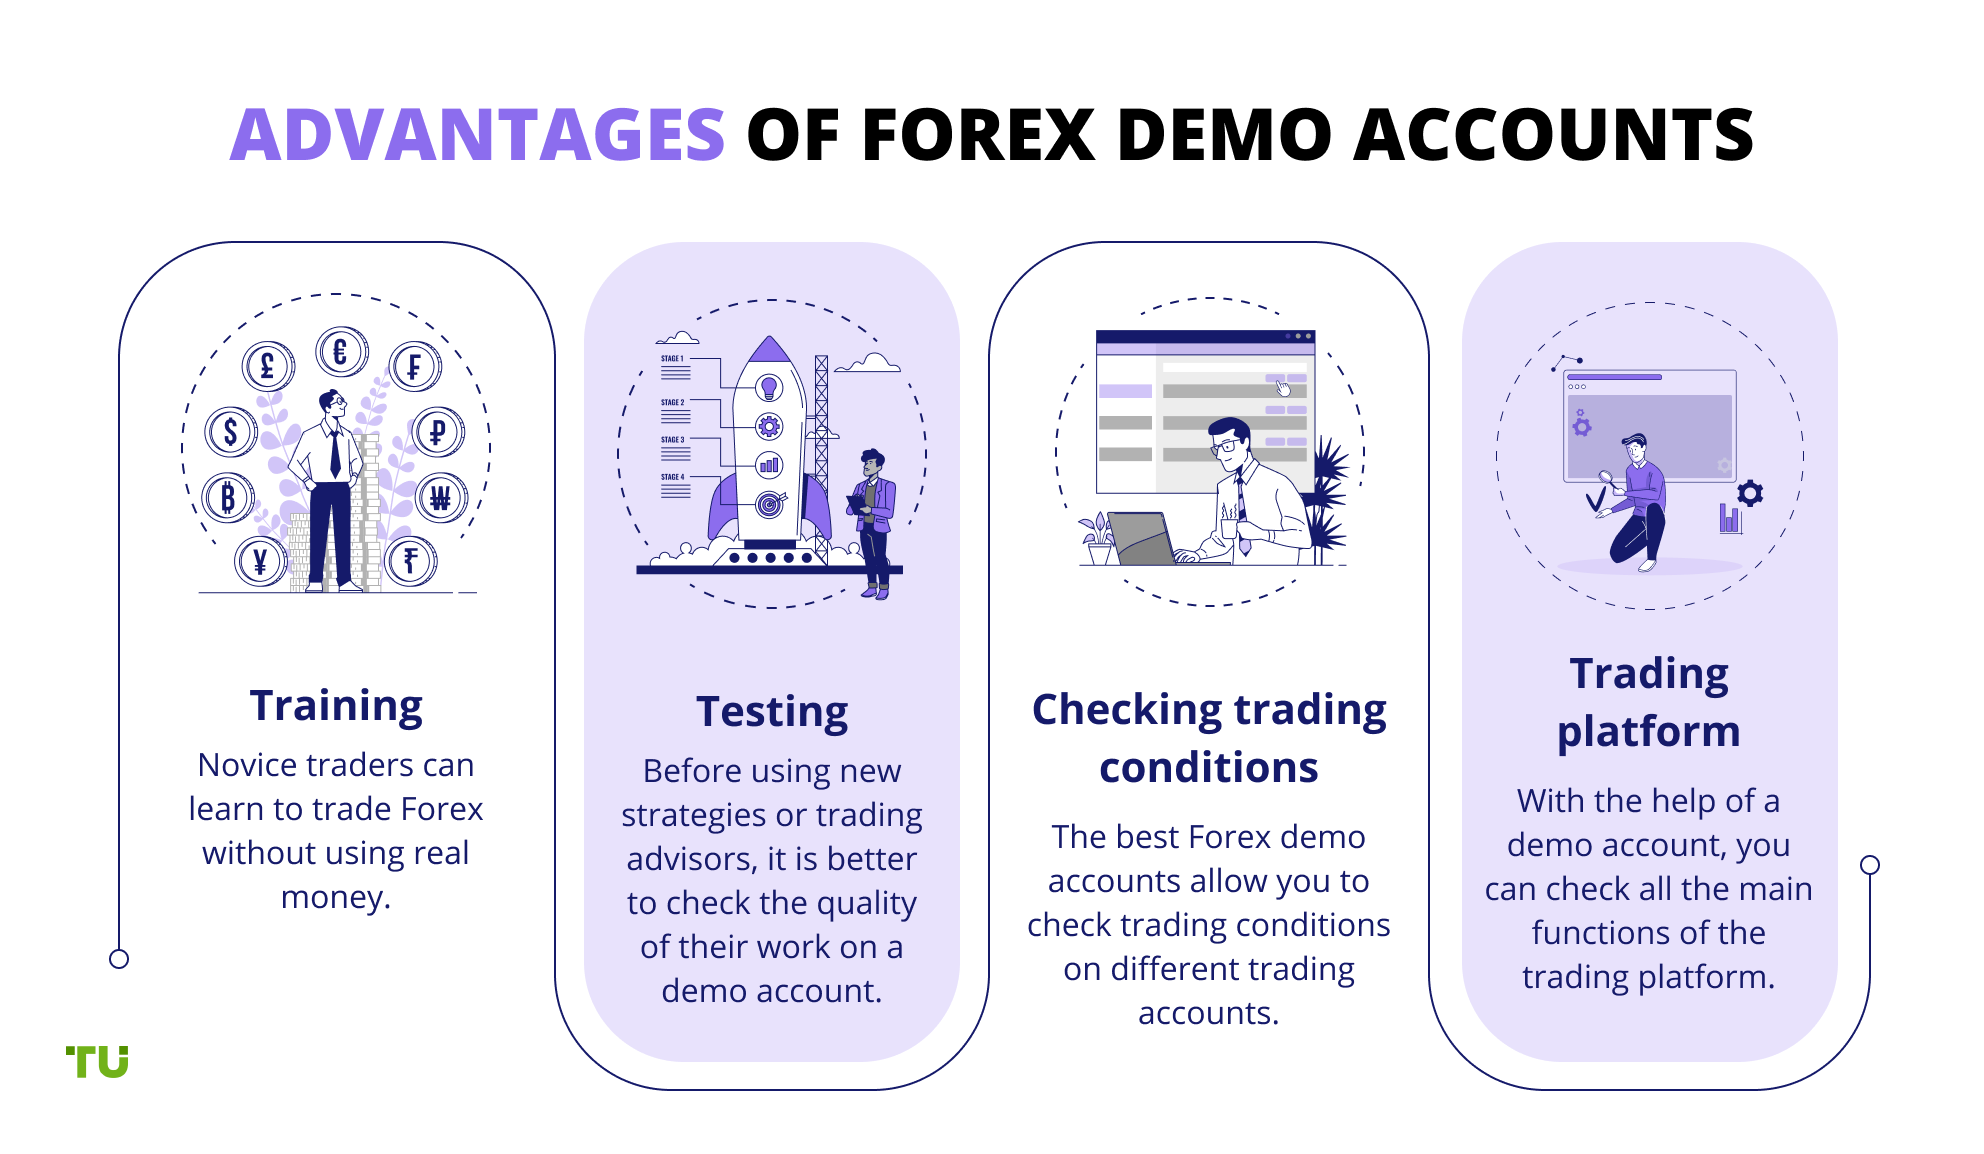 Advantages of Forex demo accounts